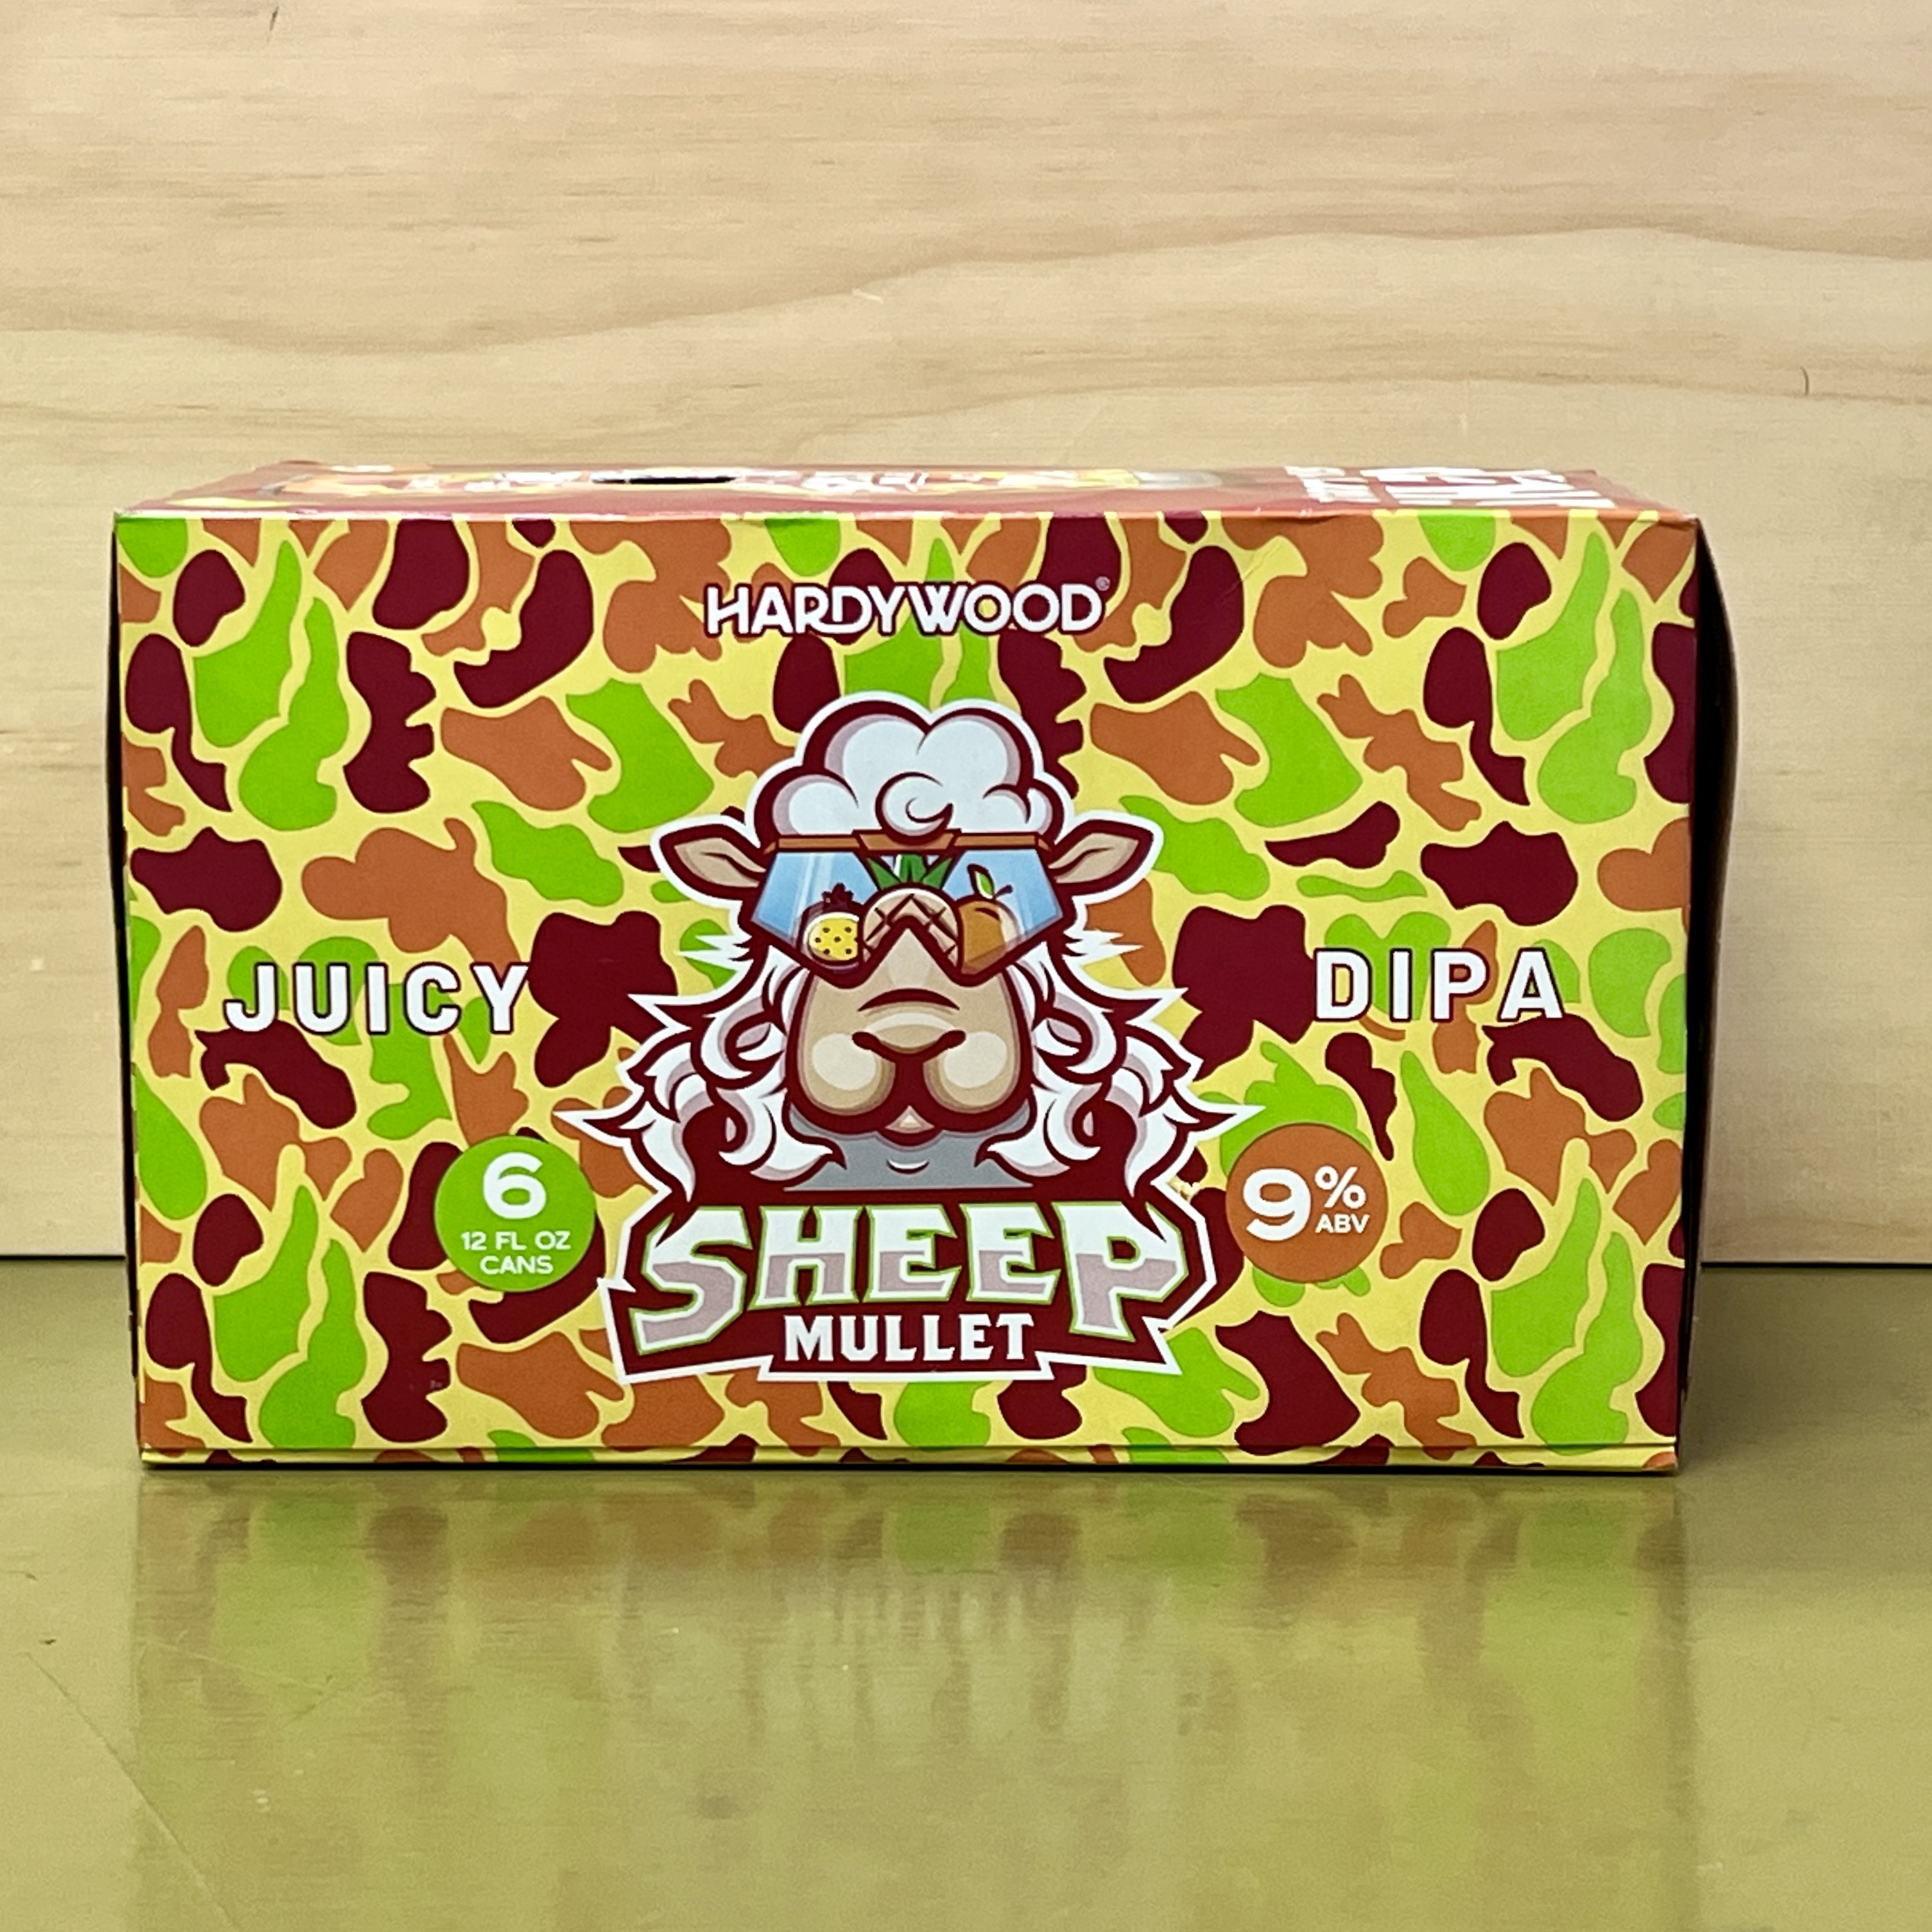 Hardywood Sheep Mullet Juicy Double IPA 6 x 12oz cans